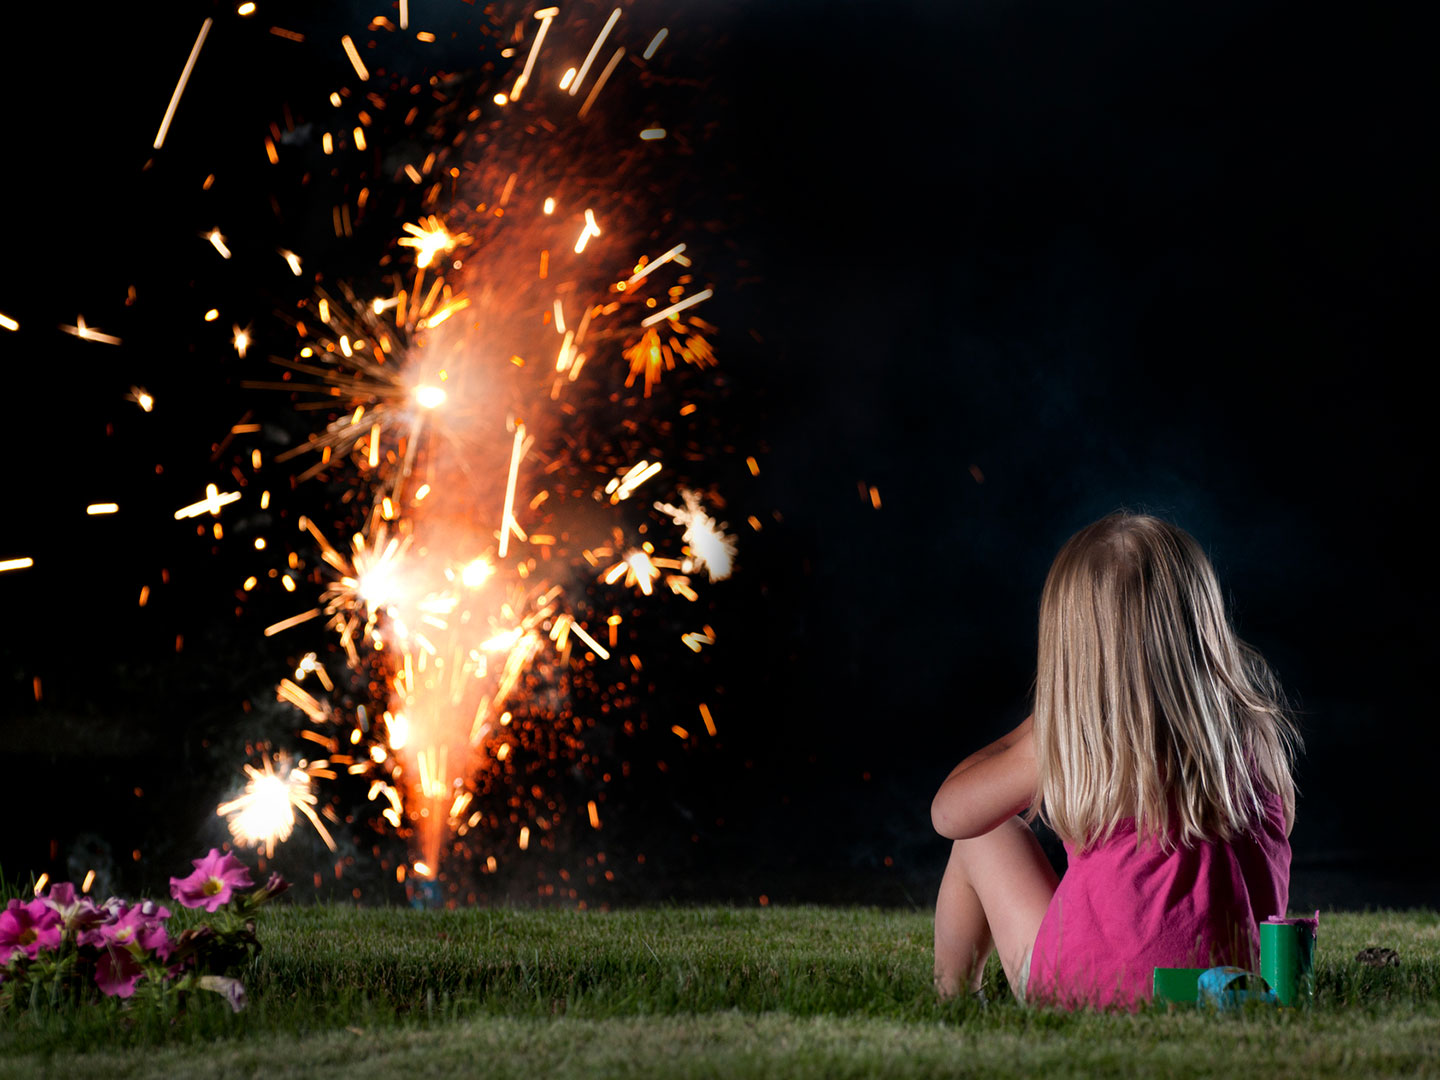 amateur consumer fireworks display